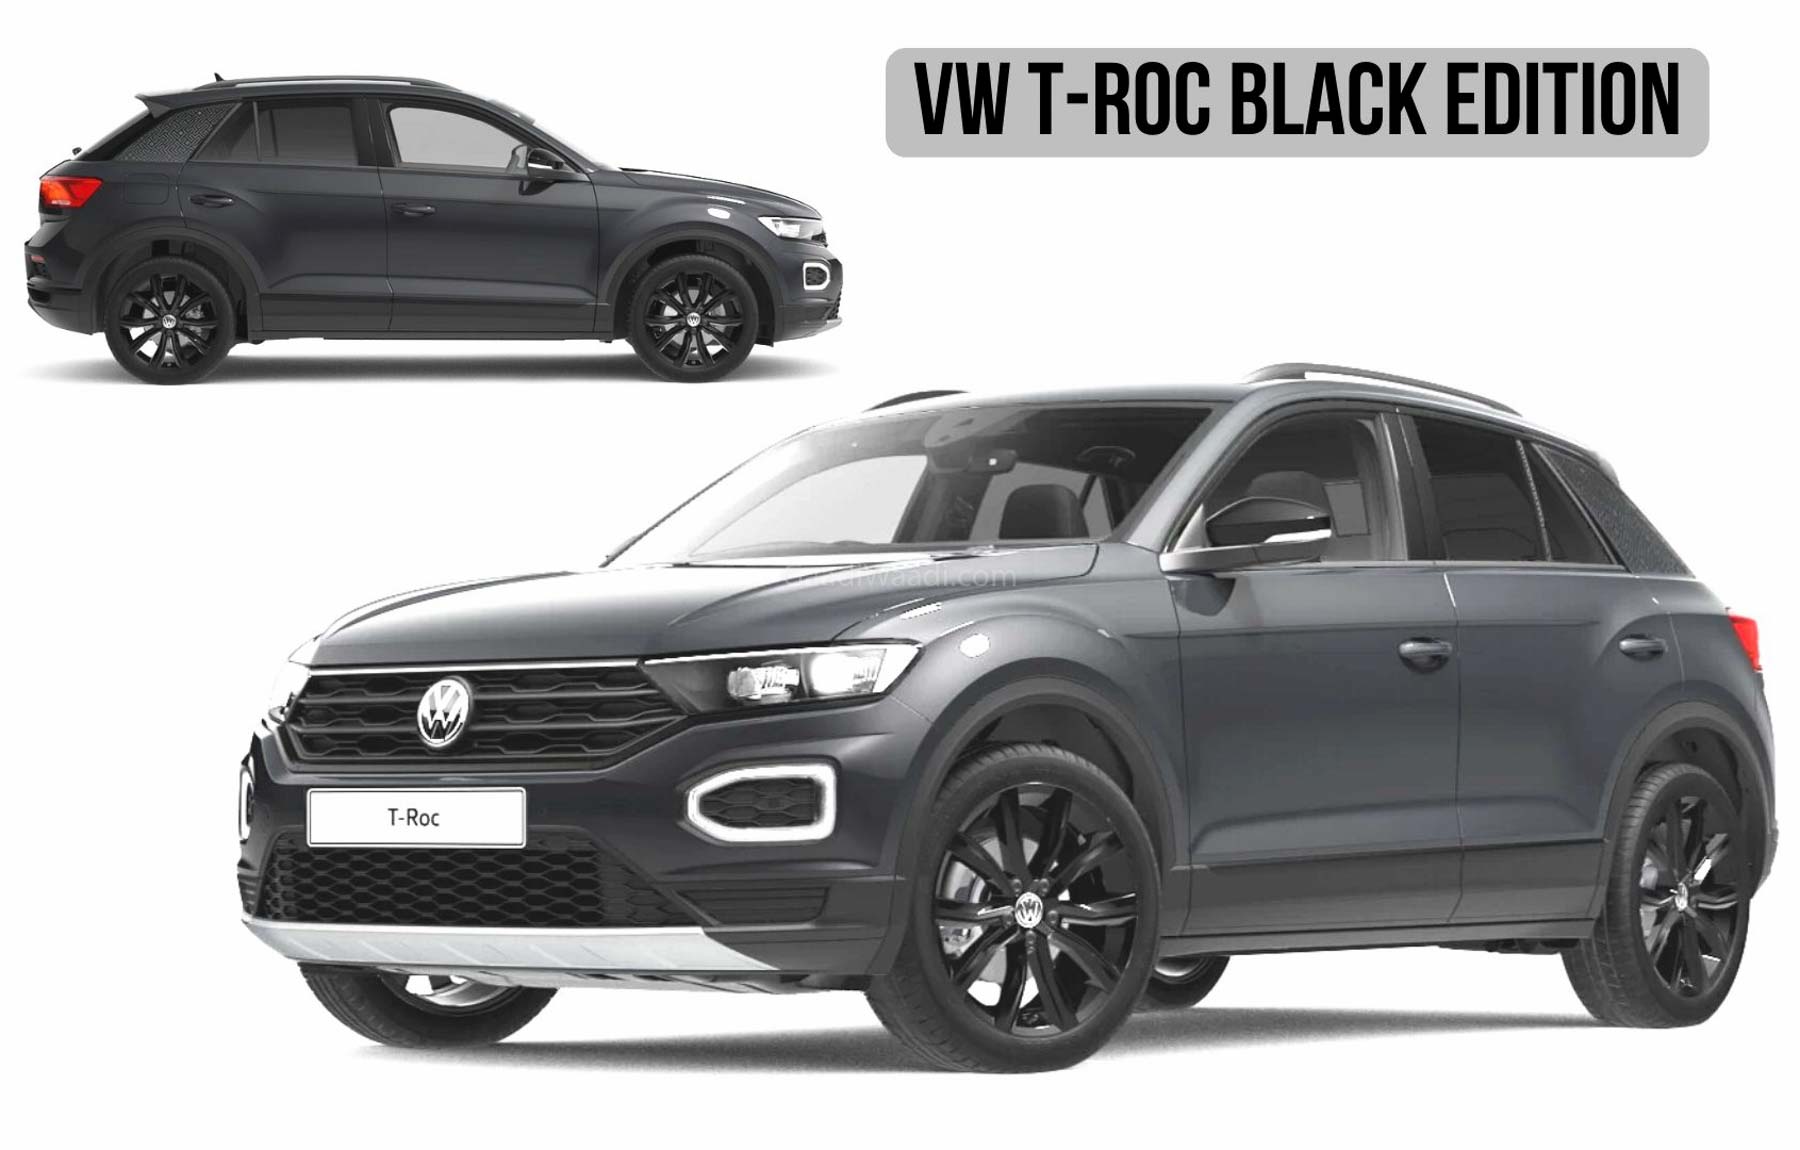 https://gaadiwaadi.com/wp-content/uploads/2020/05/VW-T-Roc-black-edition-1.jpg